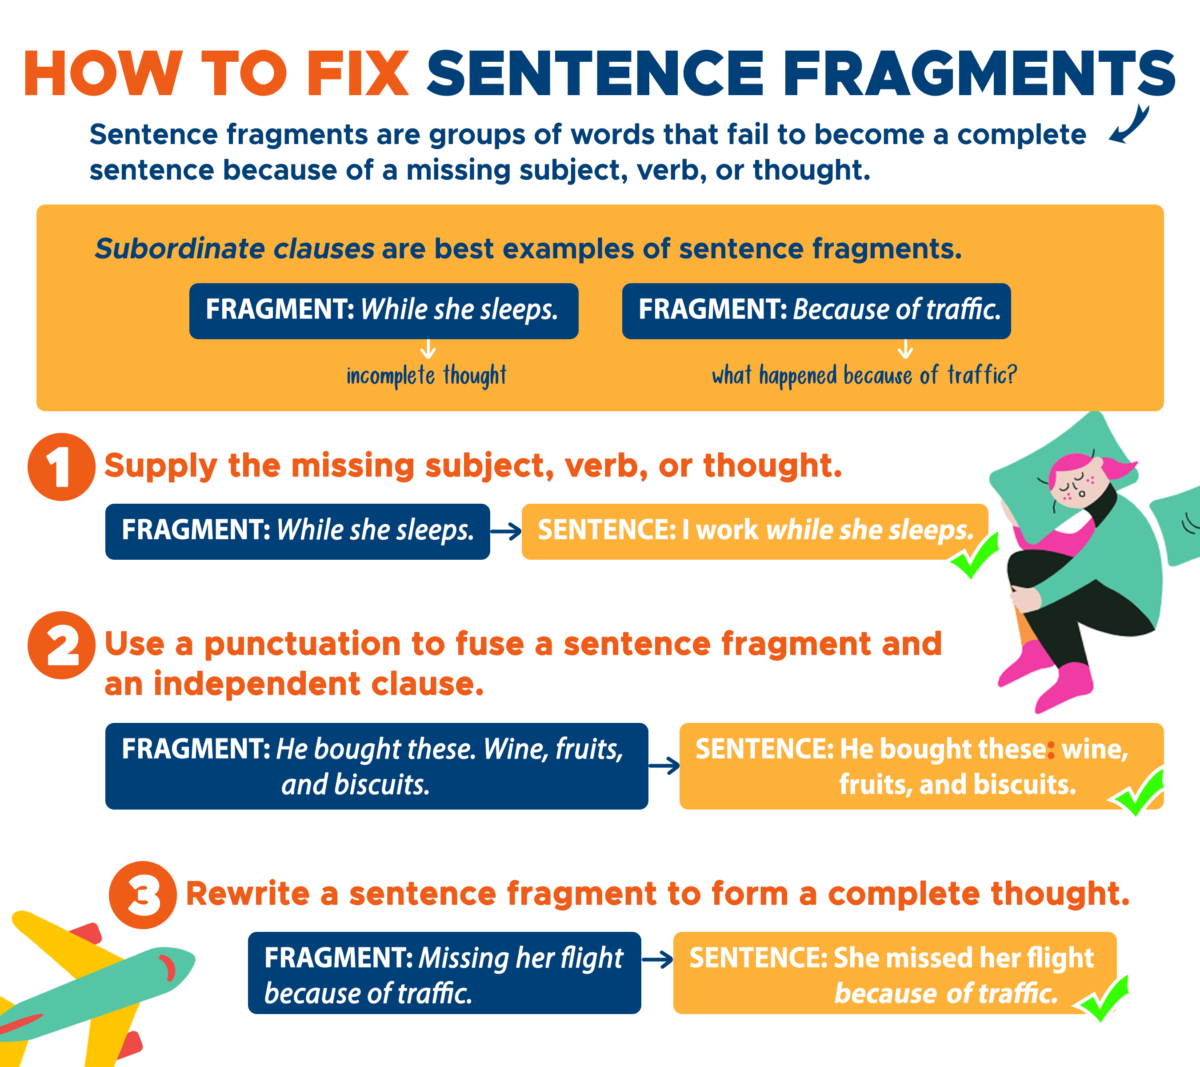 fragment sentence meaning